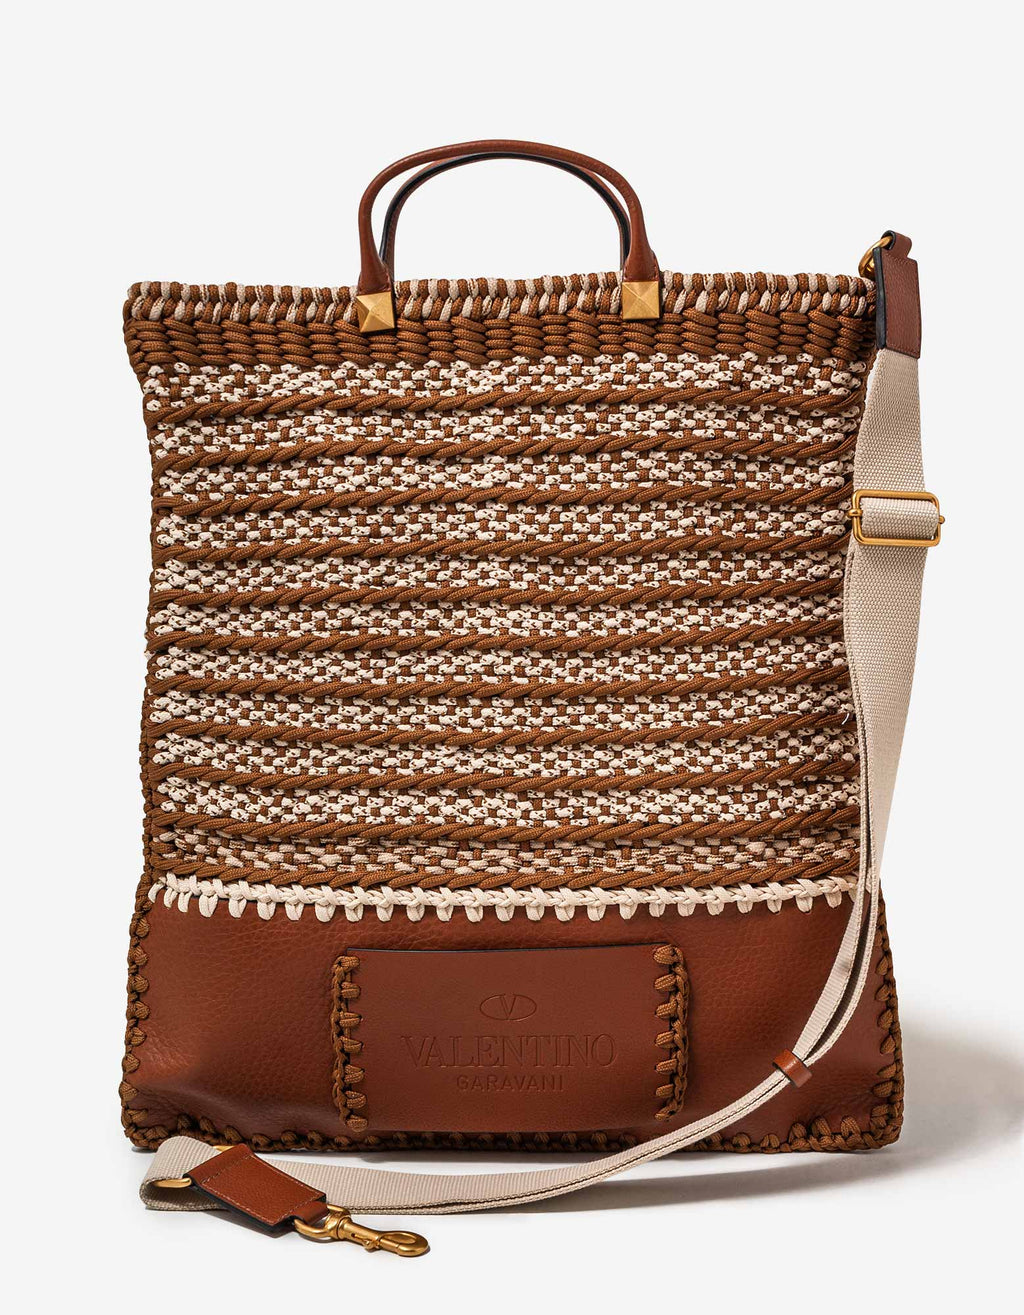 Valentino Garavani Valentino Garavani Brown Leather and Crochet Tote Bag